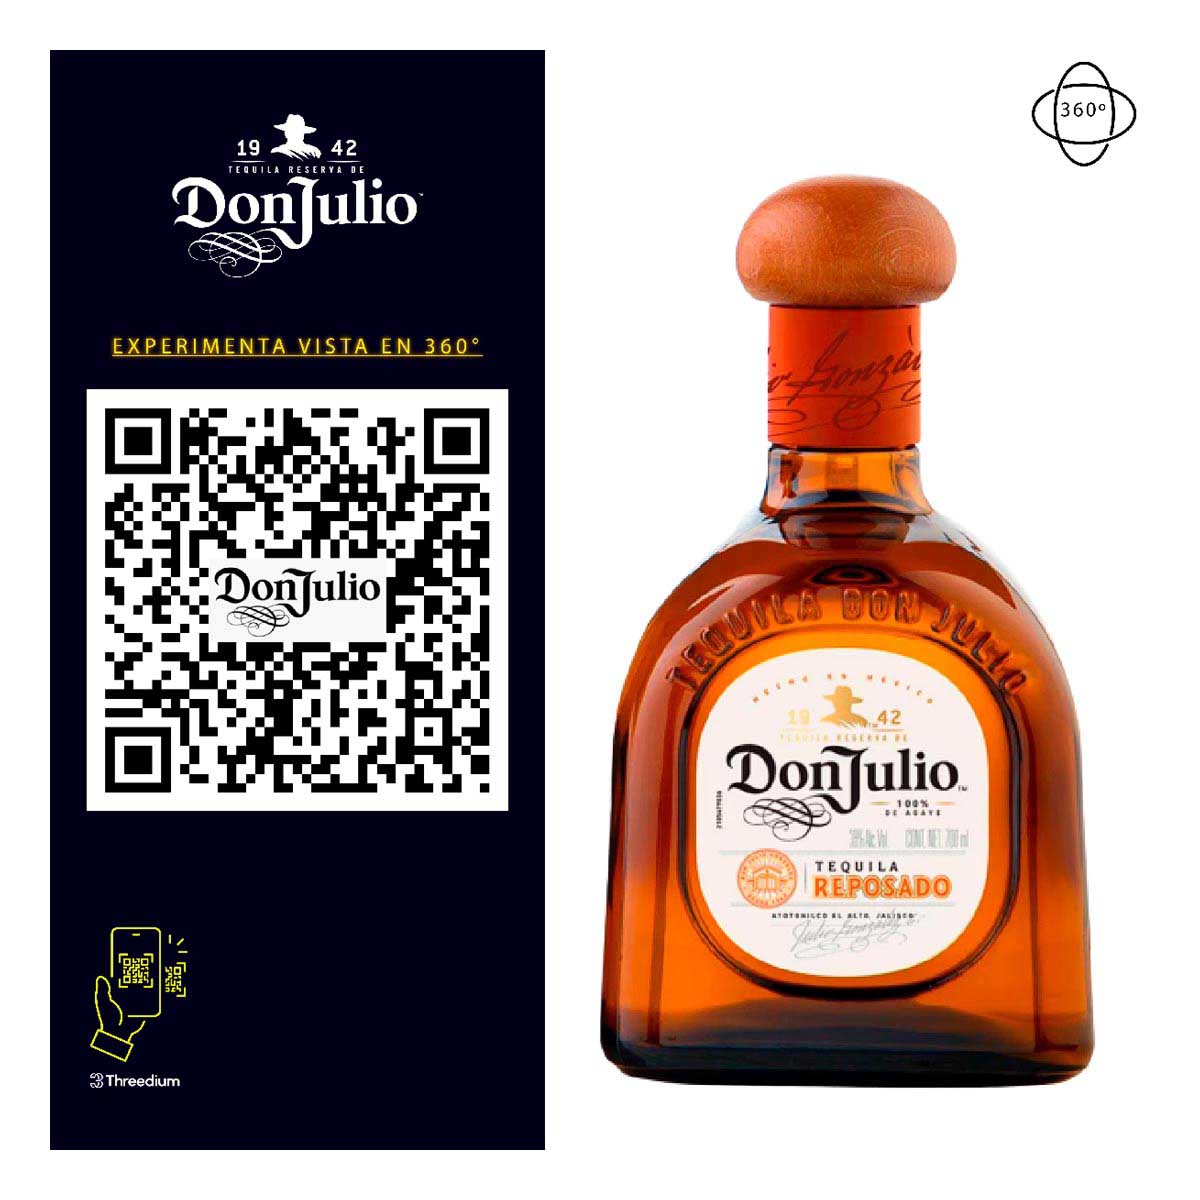 Tequila Don Julio Reposado 700 ml